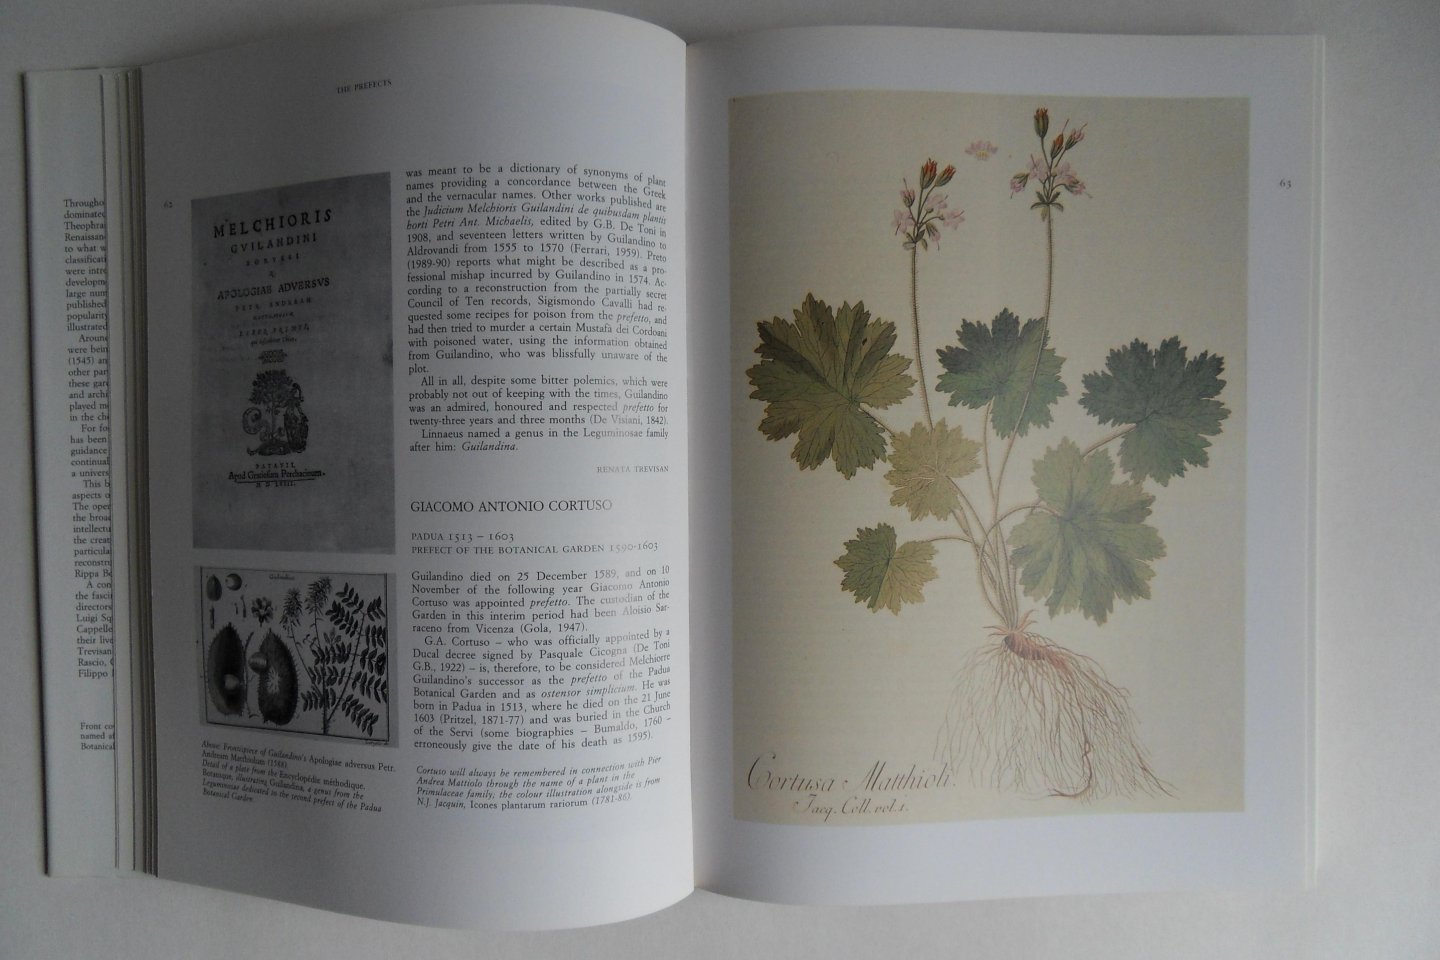 Minelli, Alessandro (editor). - The Botanical Garden of Padua 1545 - 1995.